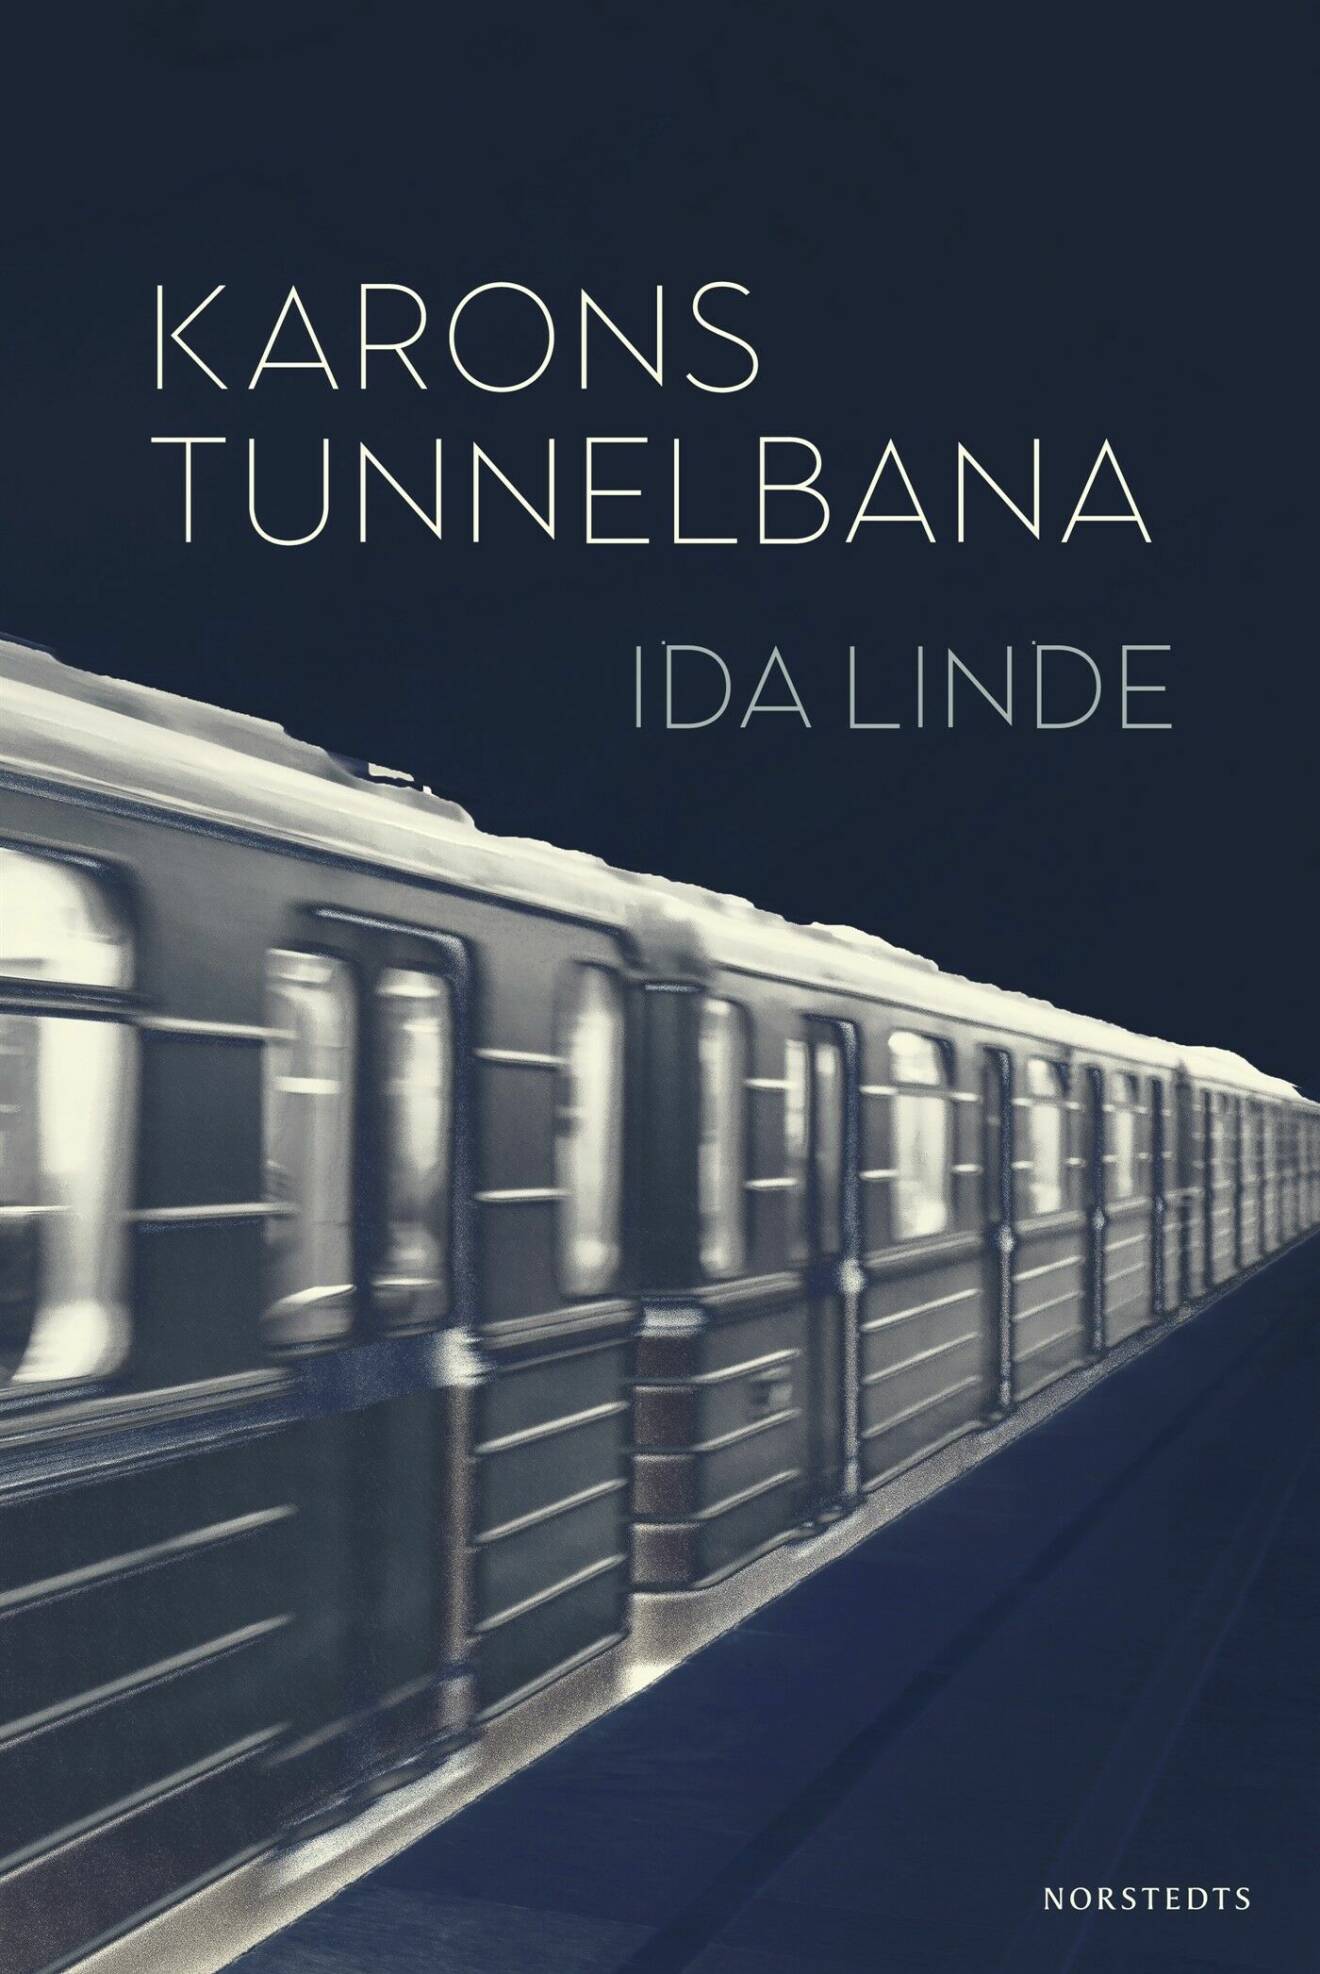 Karons Tunnelbana av Ida Linde.